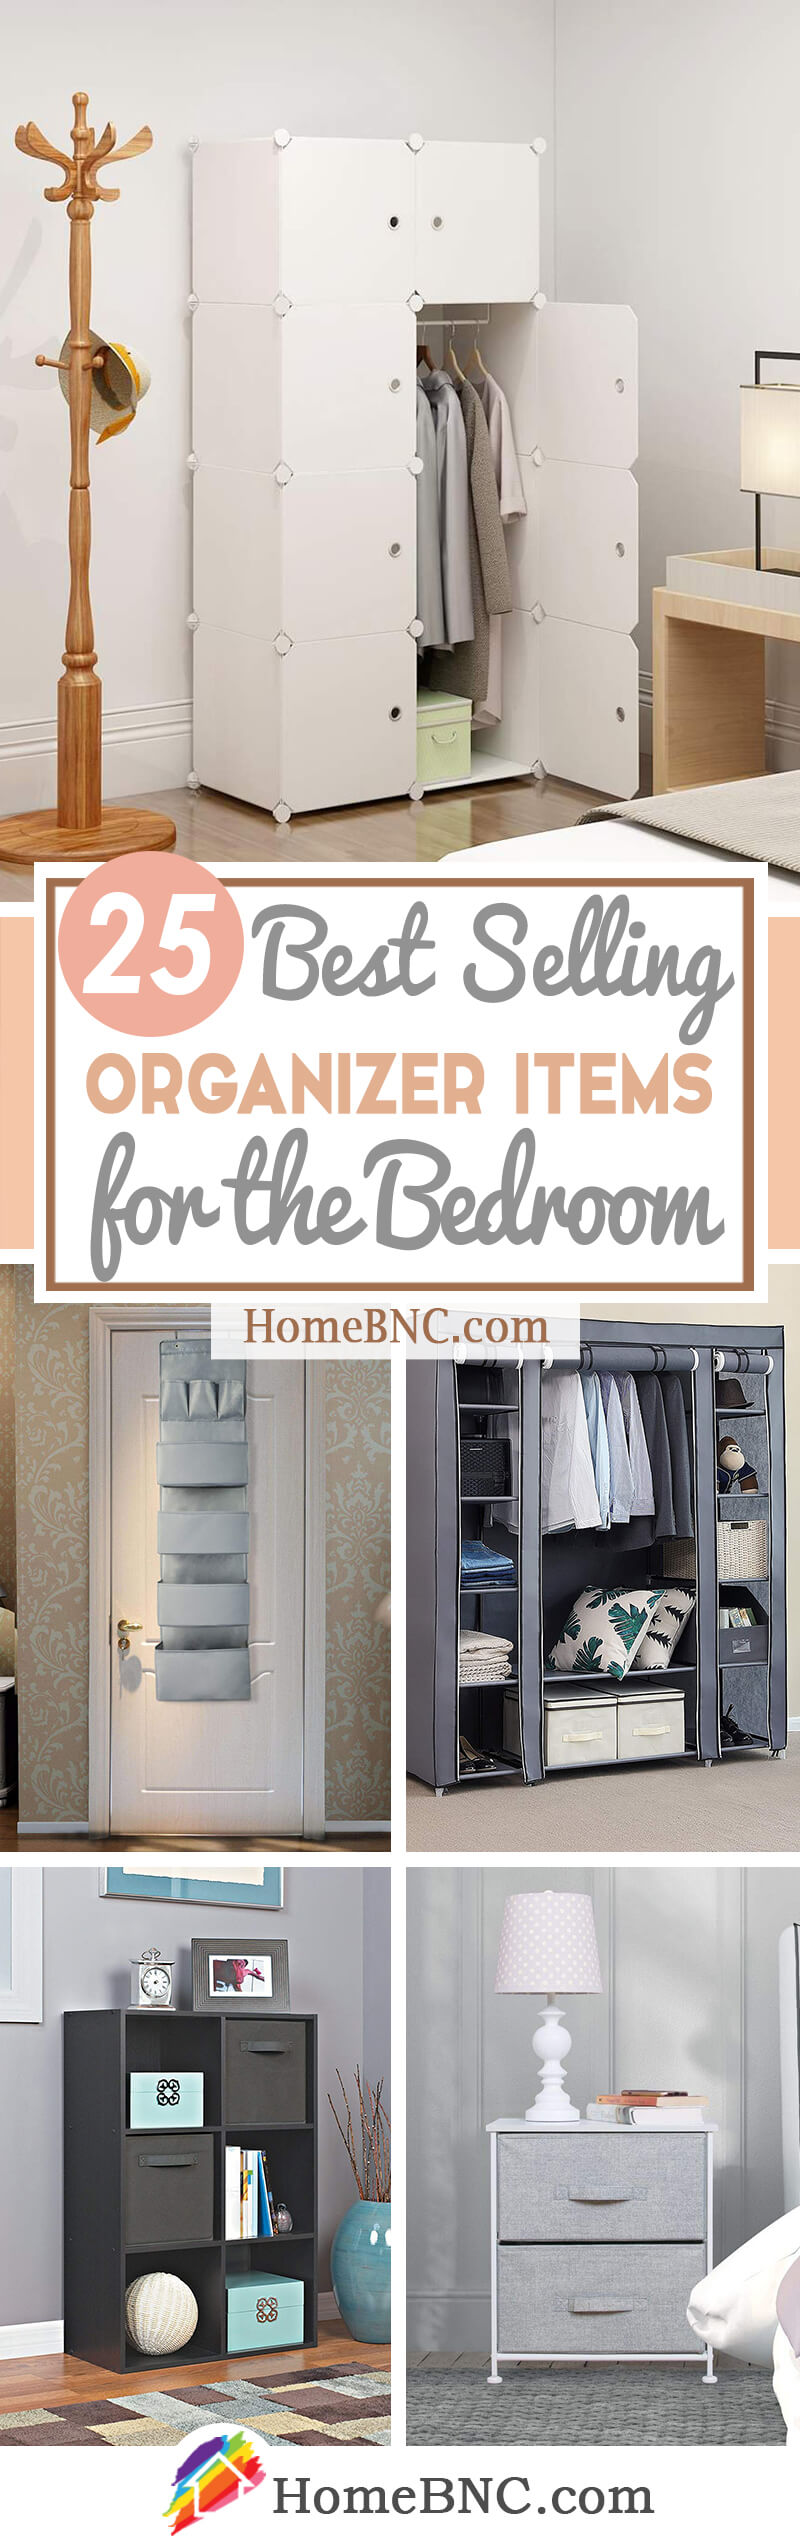 https://homebnc.com/homeimg/2019/08/best-selling-organizer-products-for-bedroom-on-amazon-pinterest-share-homebnc.jpg